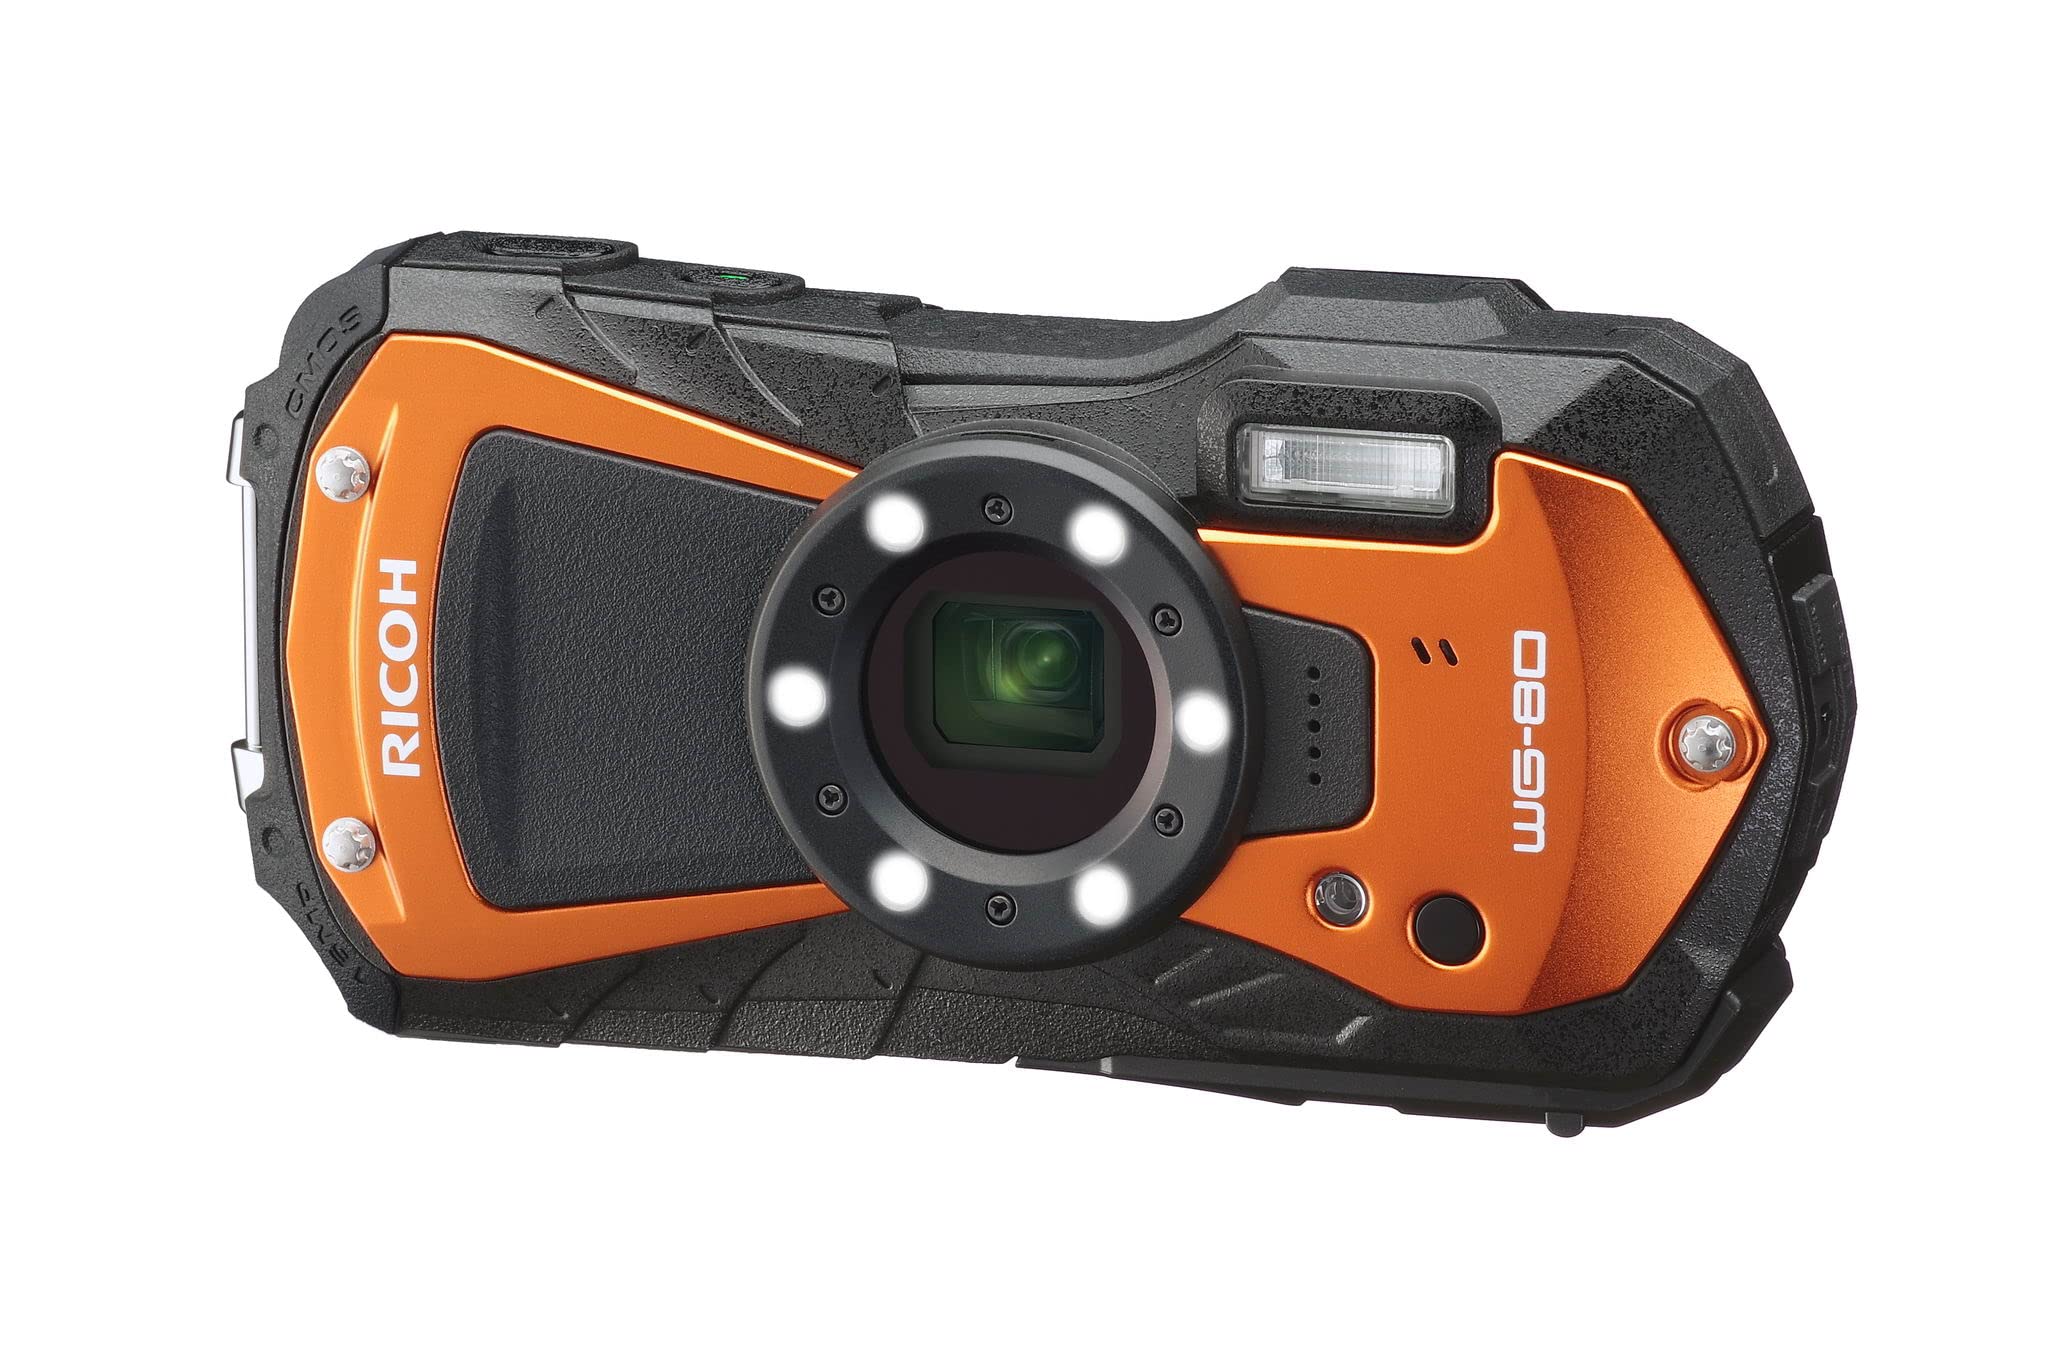 Ricoh WG-80 Orange Waterproof Digital Camera Shockproof Freezeproof Crushproof Microscope Mode, 7 x 5 x 3 inches